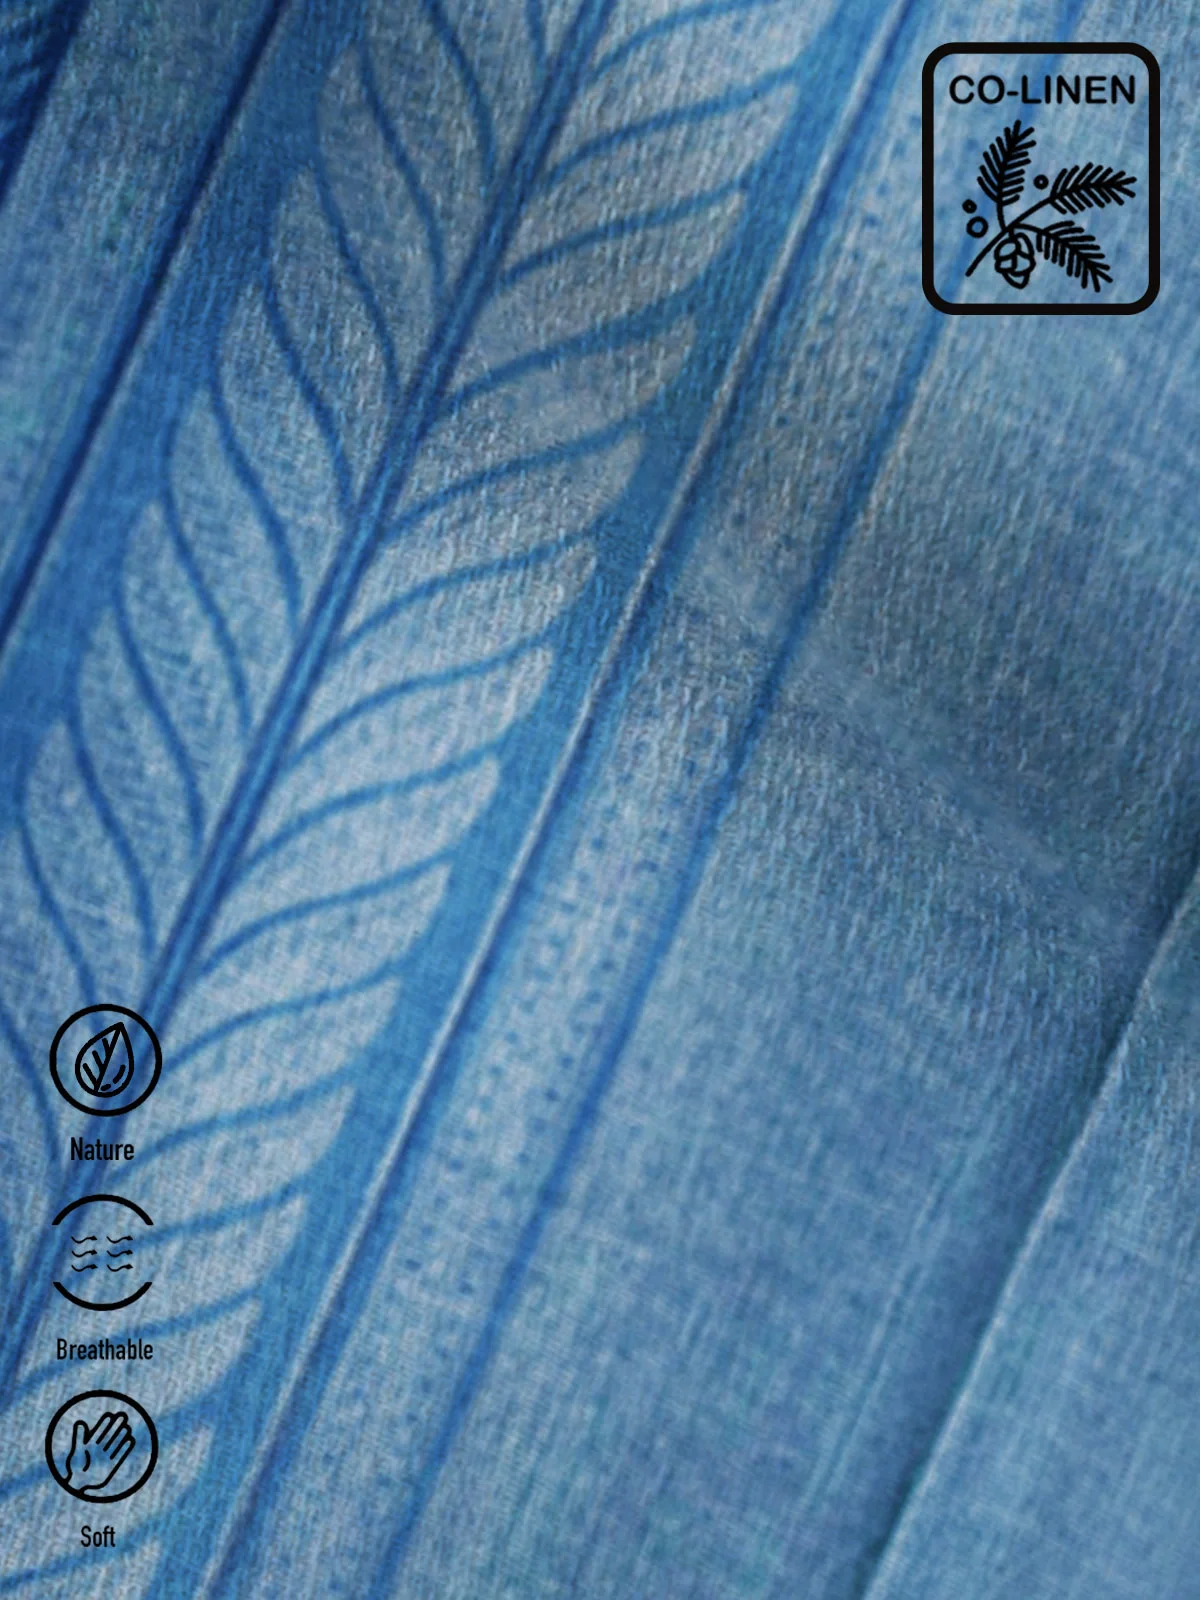 Royaura 50’s Vintage Geometric Art Blue Men's Guayabera Shirts Comfortable Blend Aloha Camp Pocket Shirts